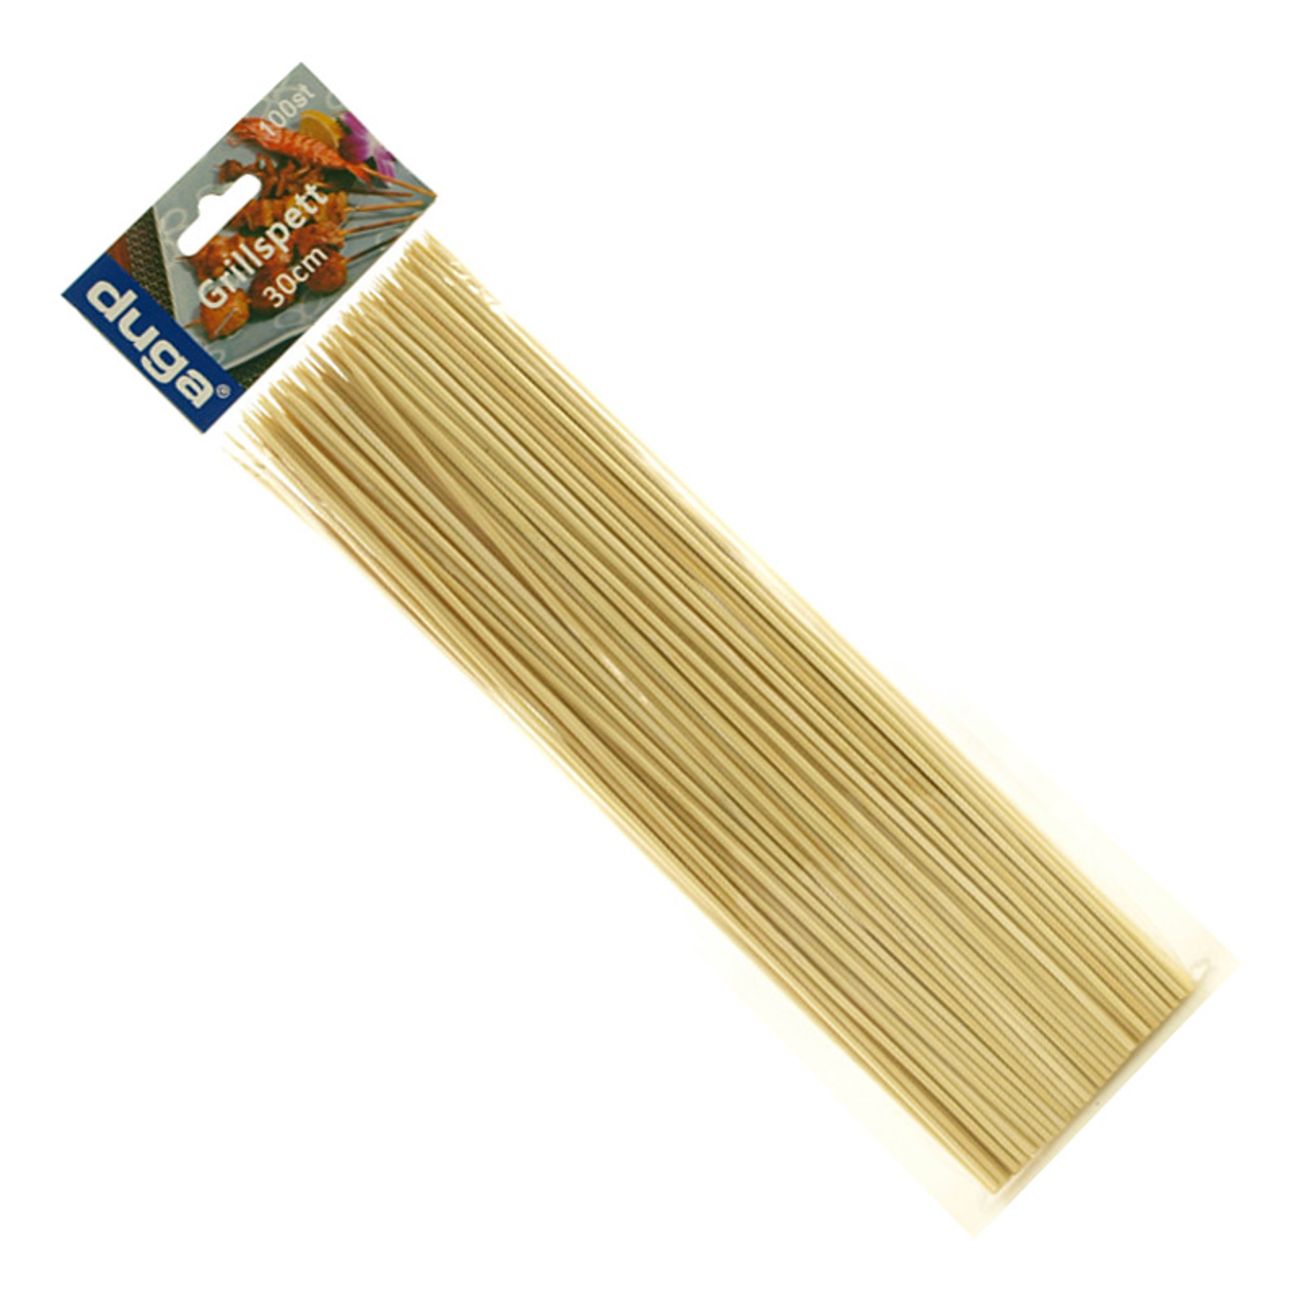 grillspett-bambu-1